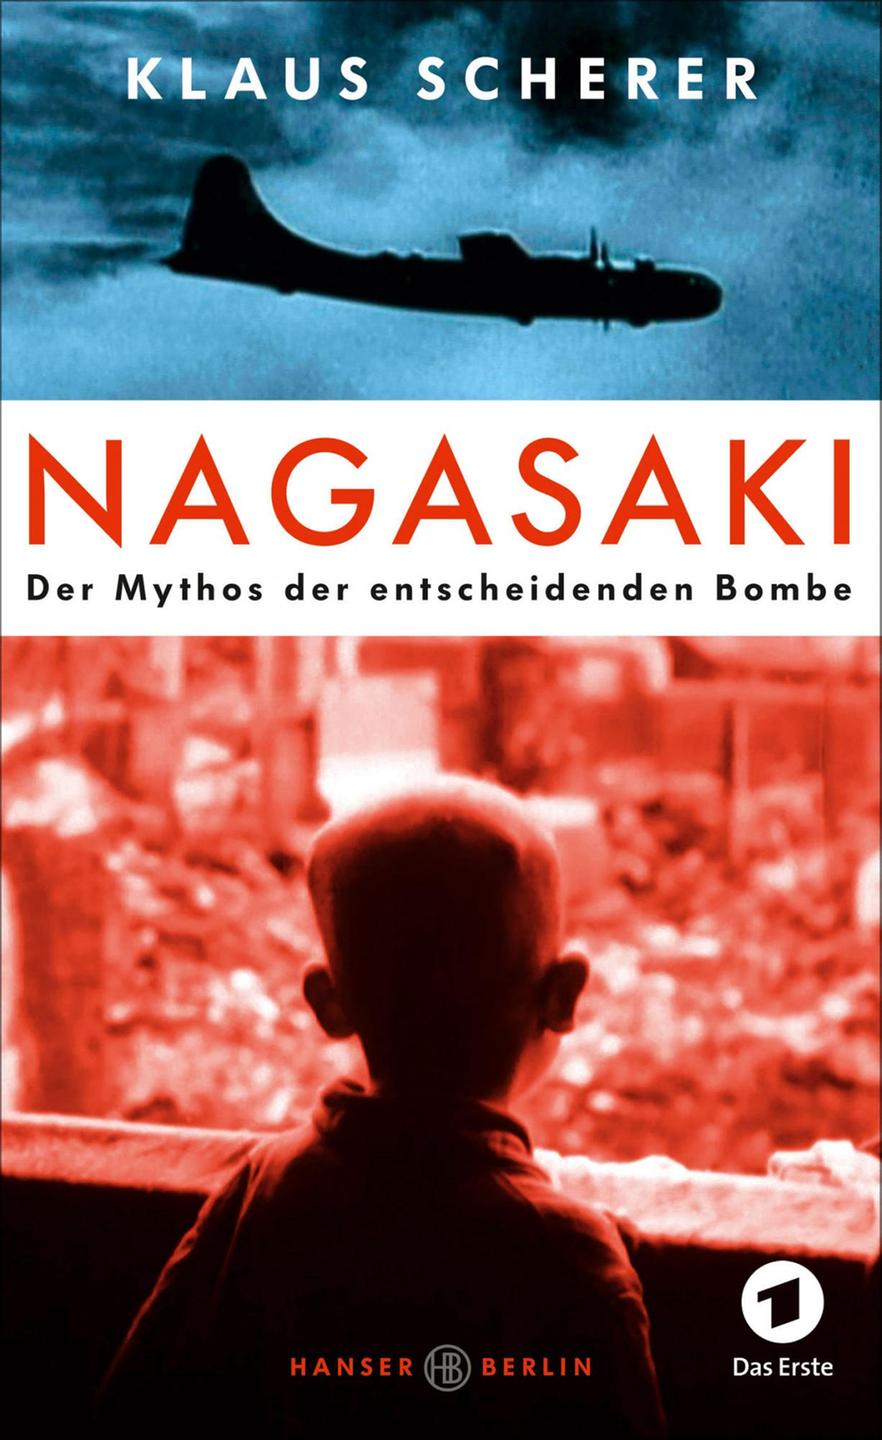 Buchcover: Klaus Scherer: "Nagasaki"